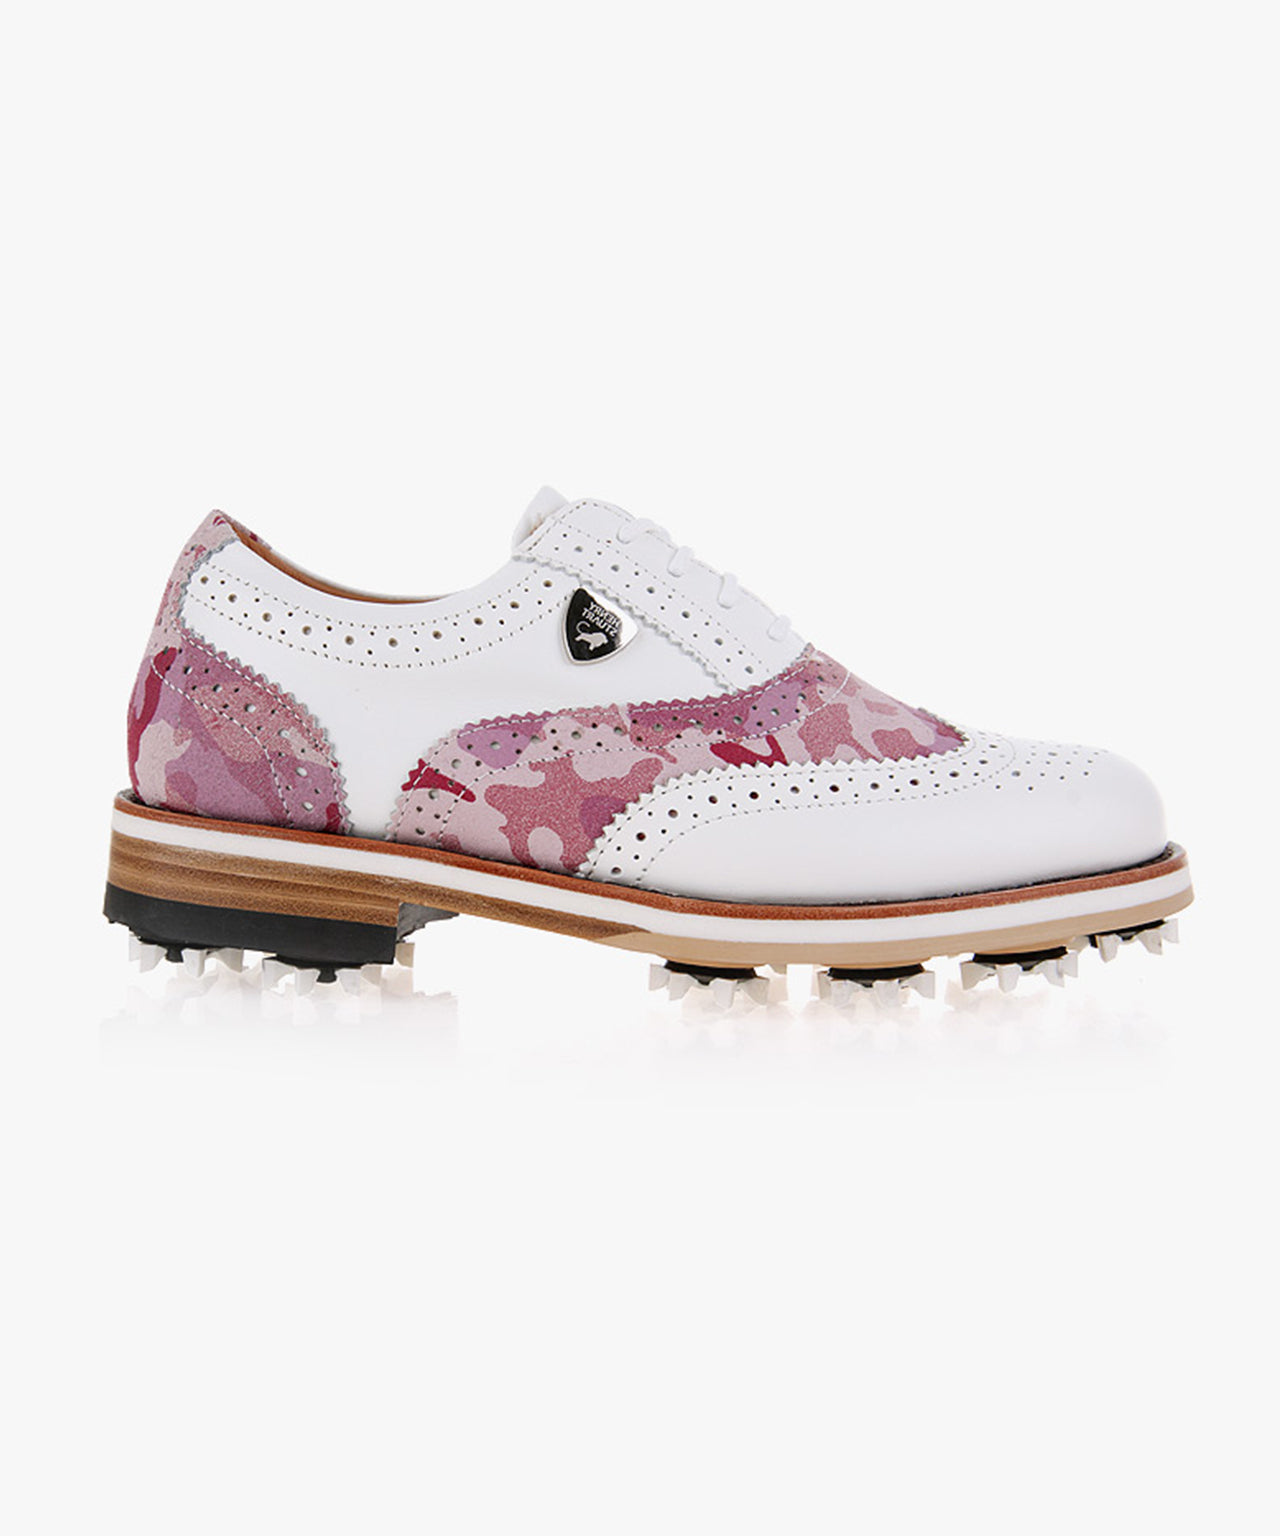 HENRY STUART Mysuit Classic Women's Spike Golf Shoes 104 - Pink Camo